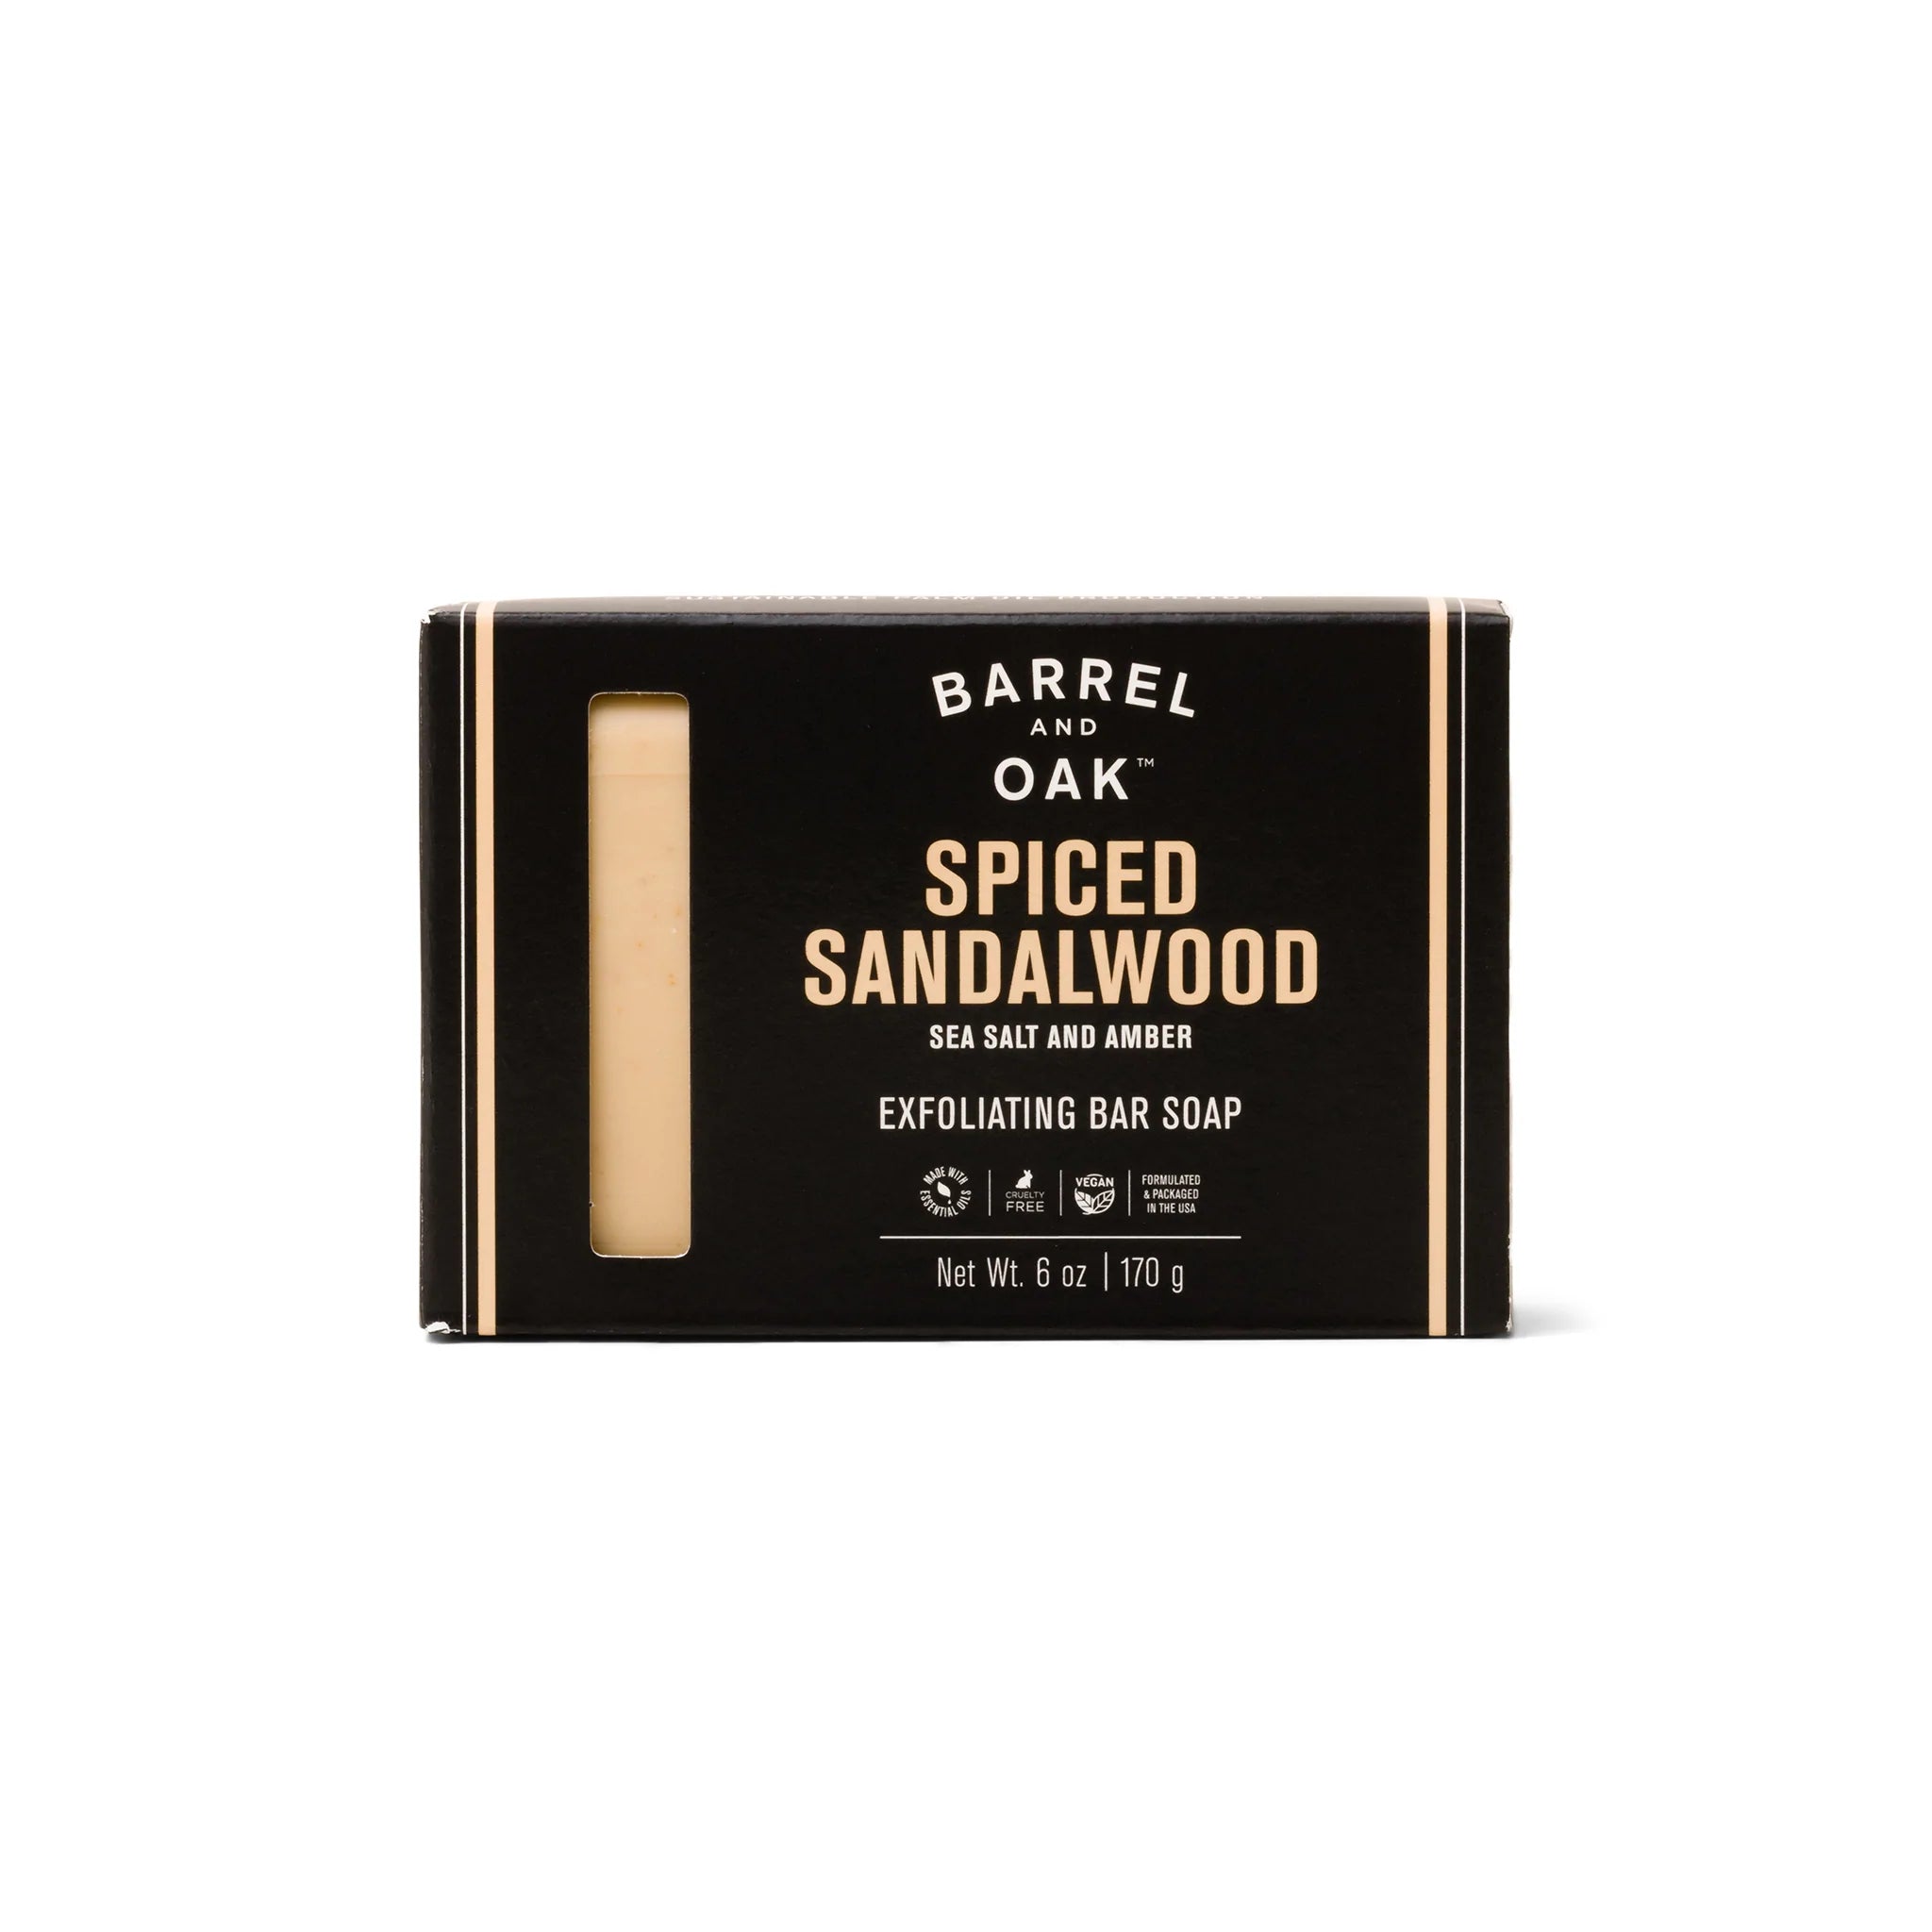 Exfoliating Bar Soap, Spiced Sandalwood